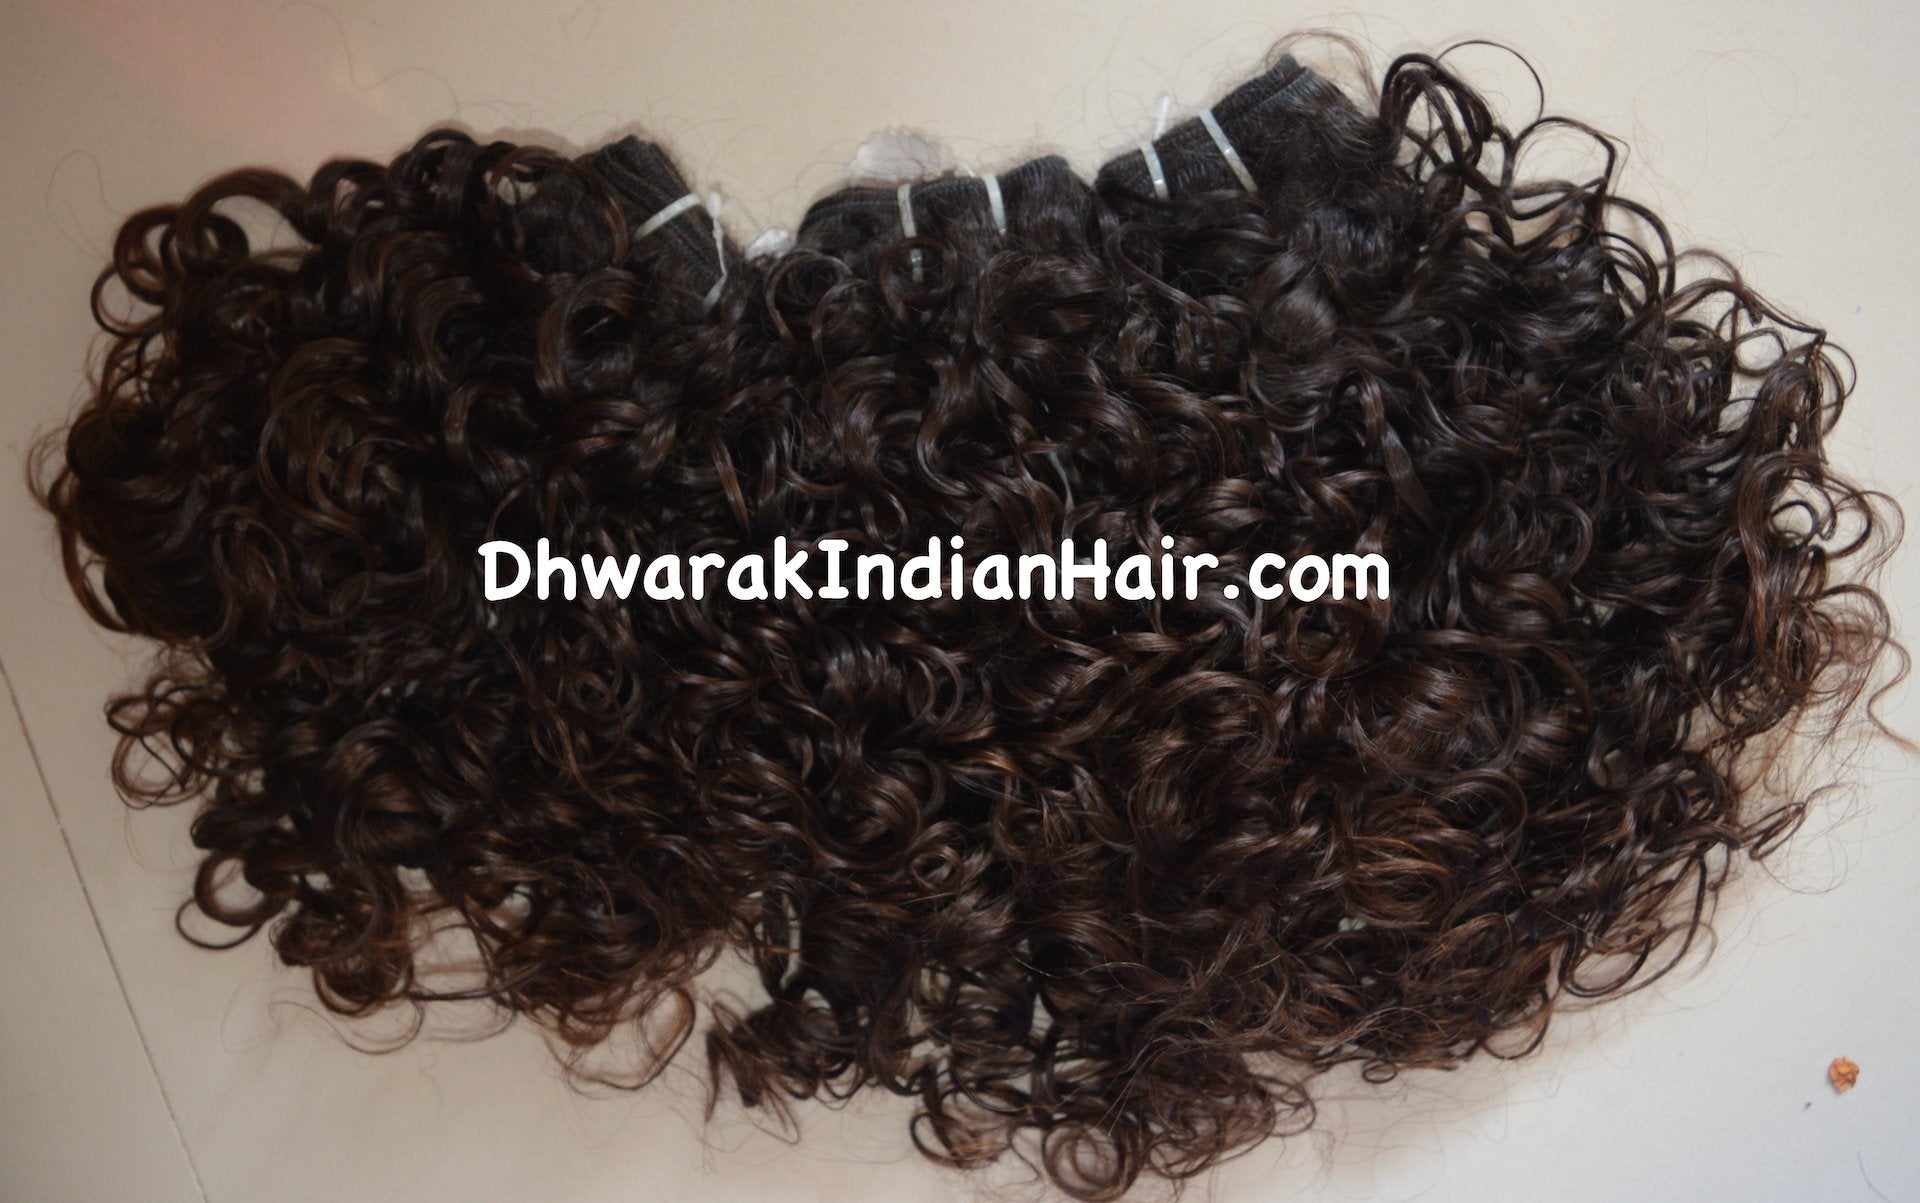 Raw Hair Vendor, Raw Indian Hair Vendor,Indian hair bundles with closures